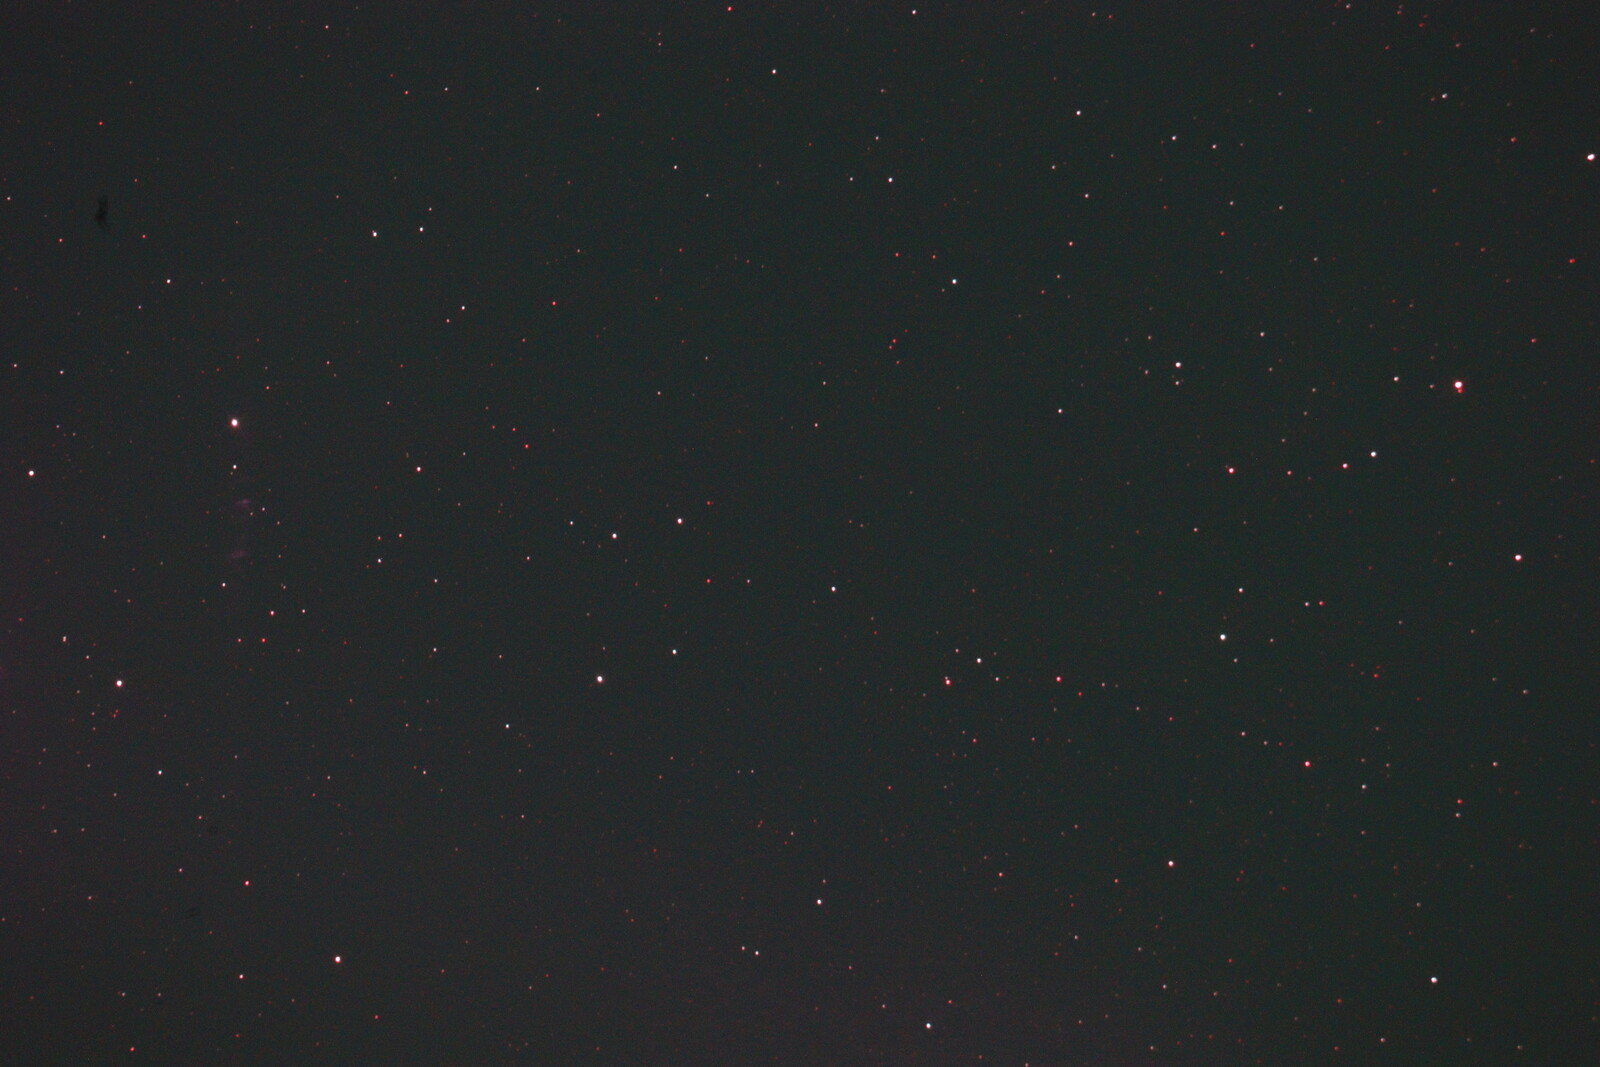 Vulpecula Star-Field